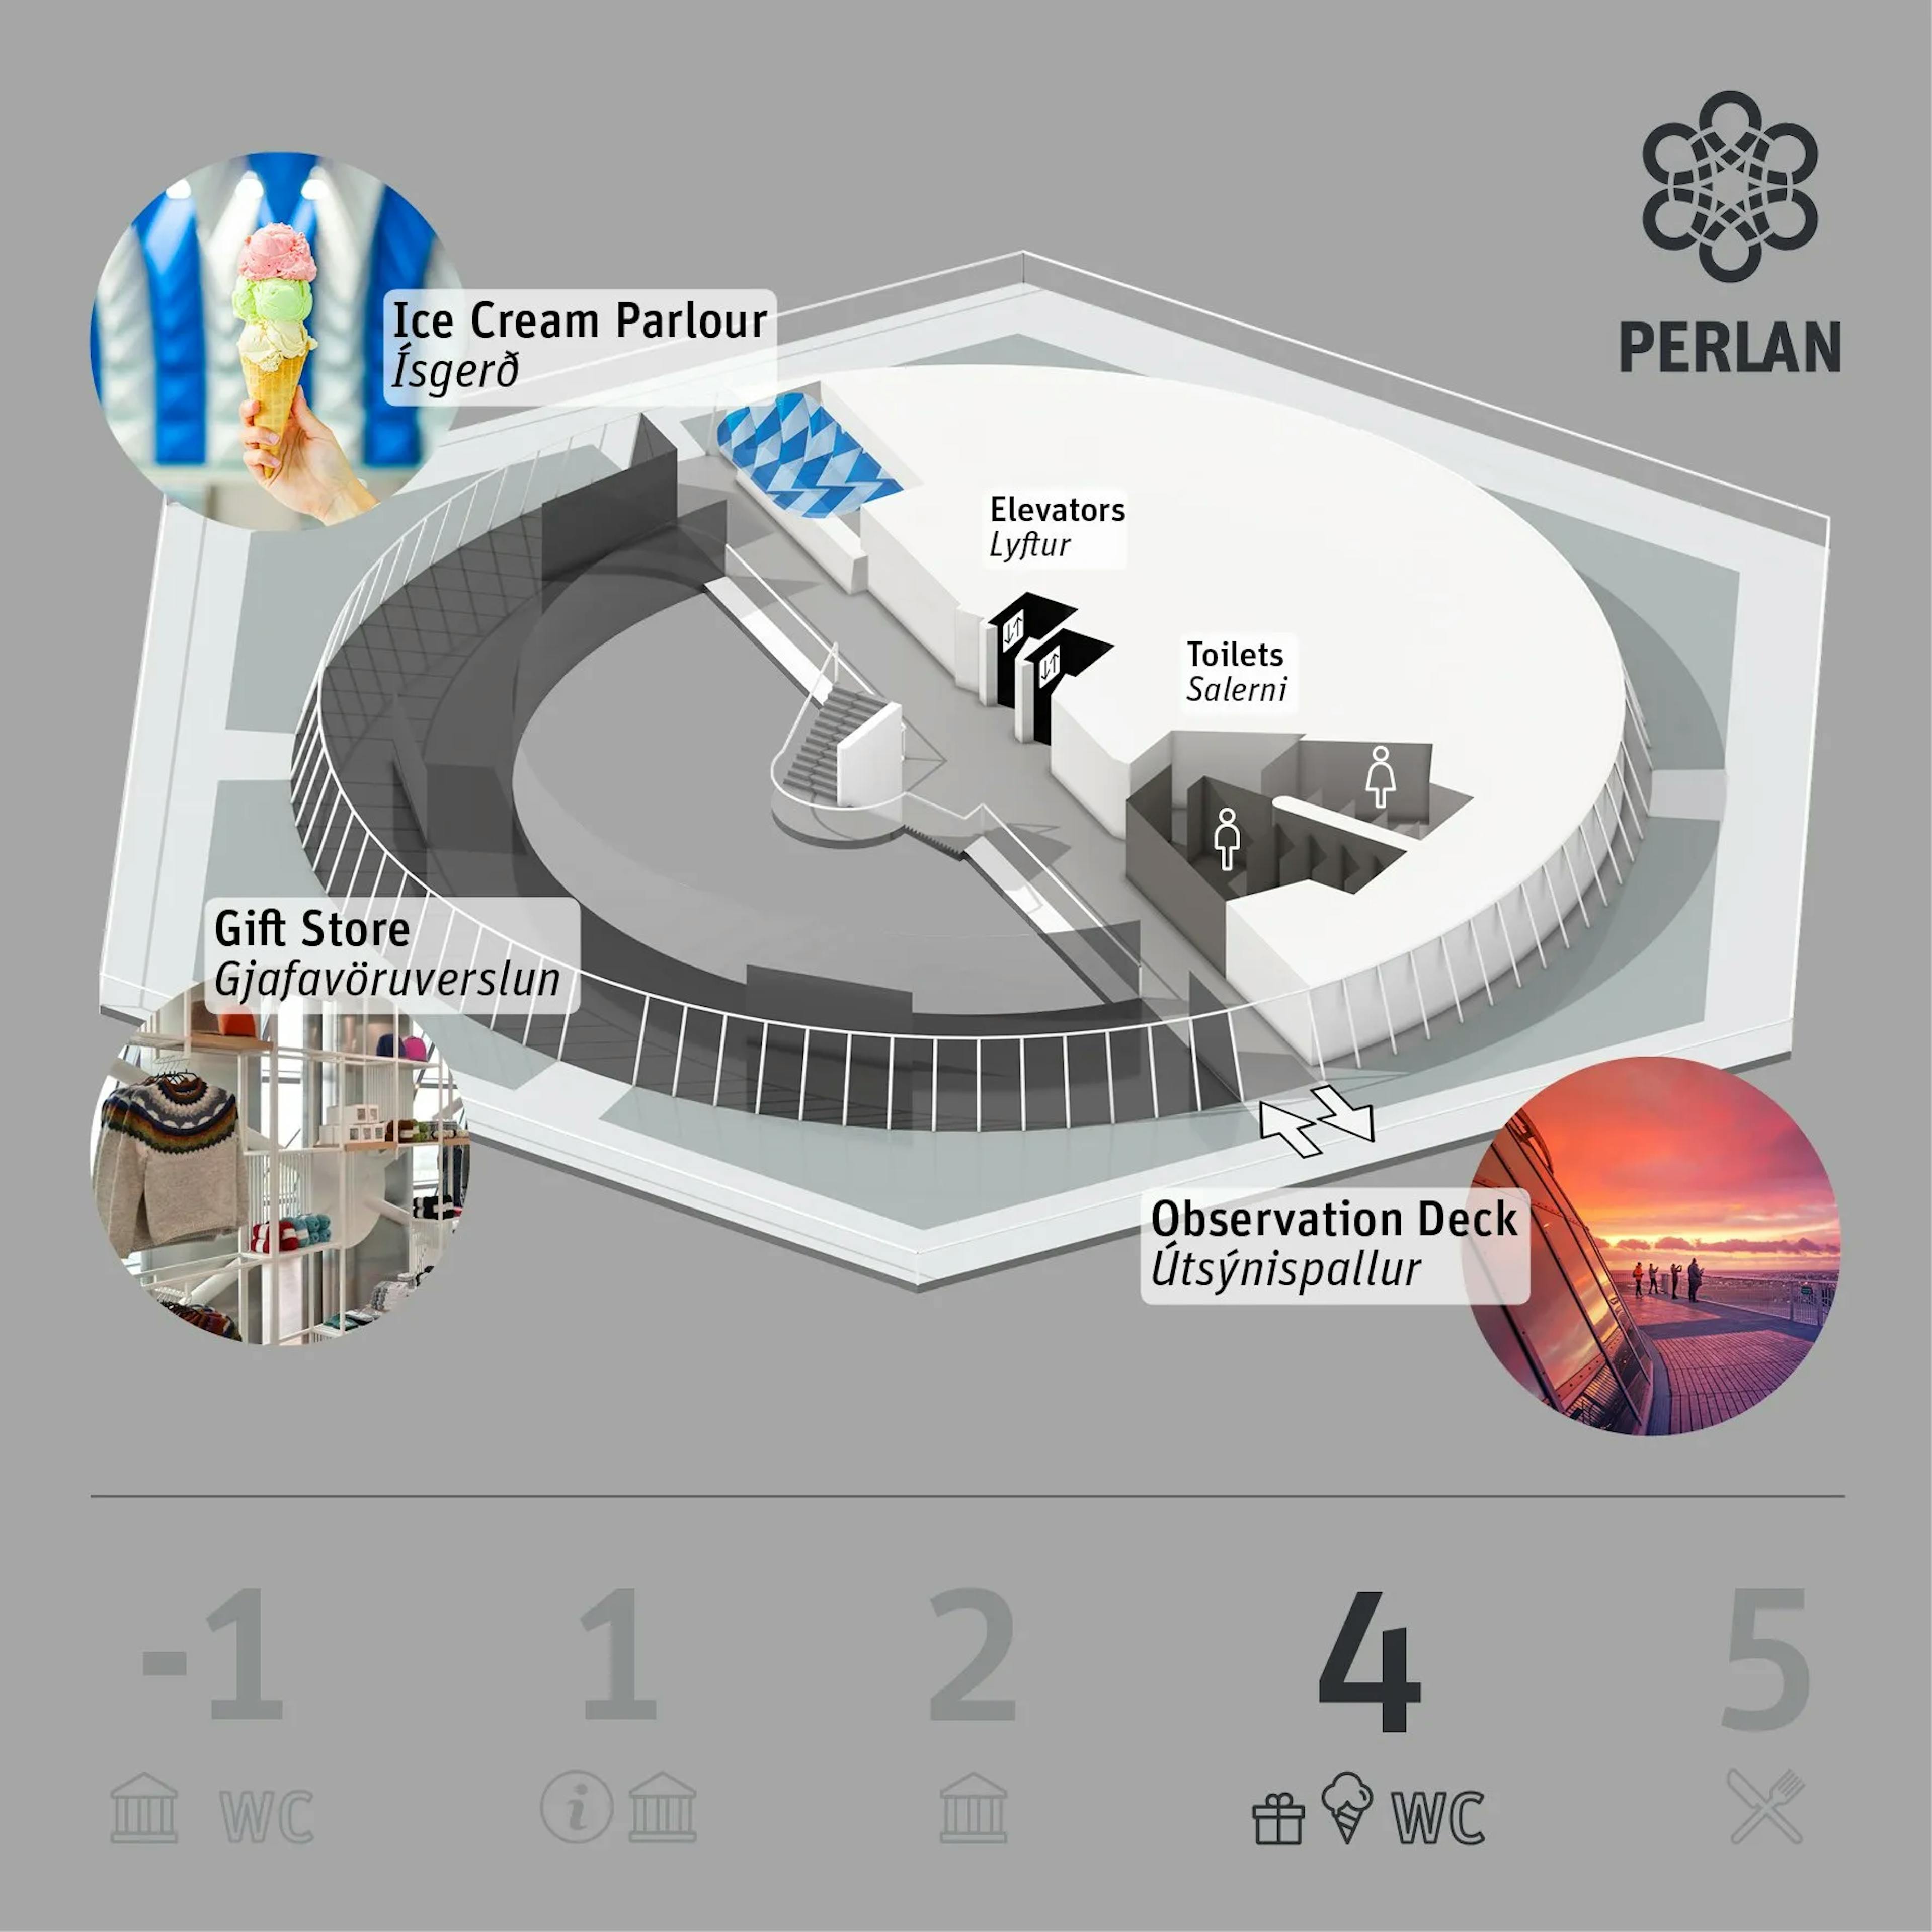 Map of Perlan 4th floor